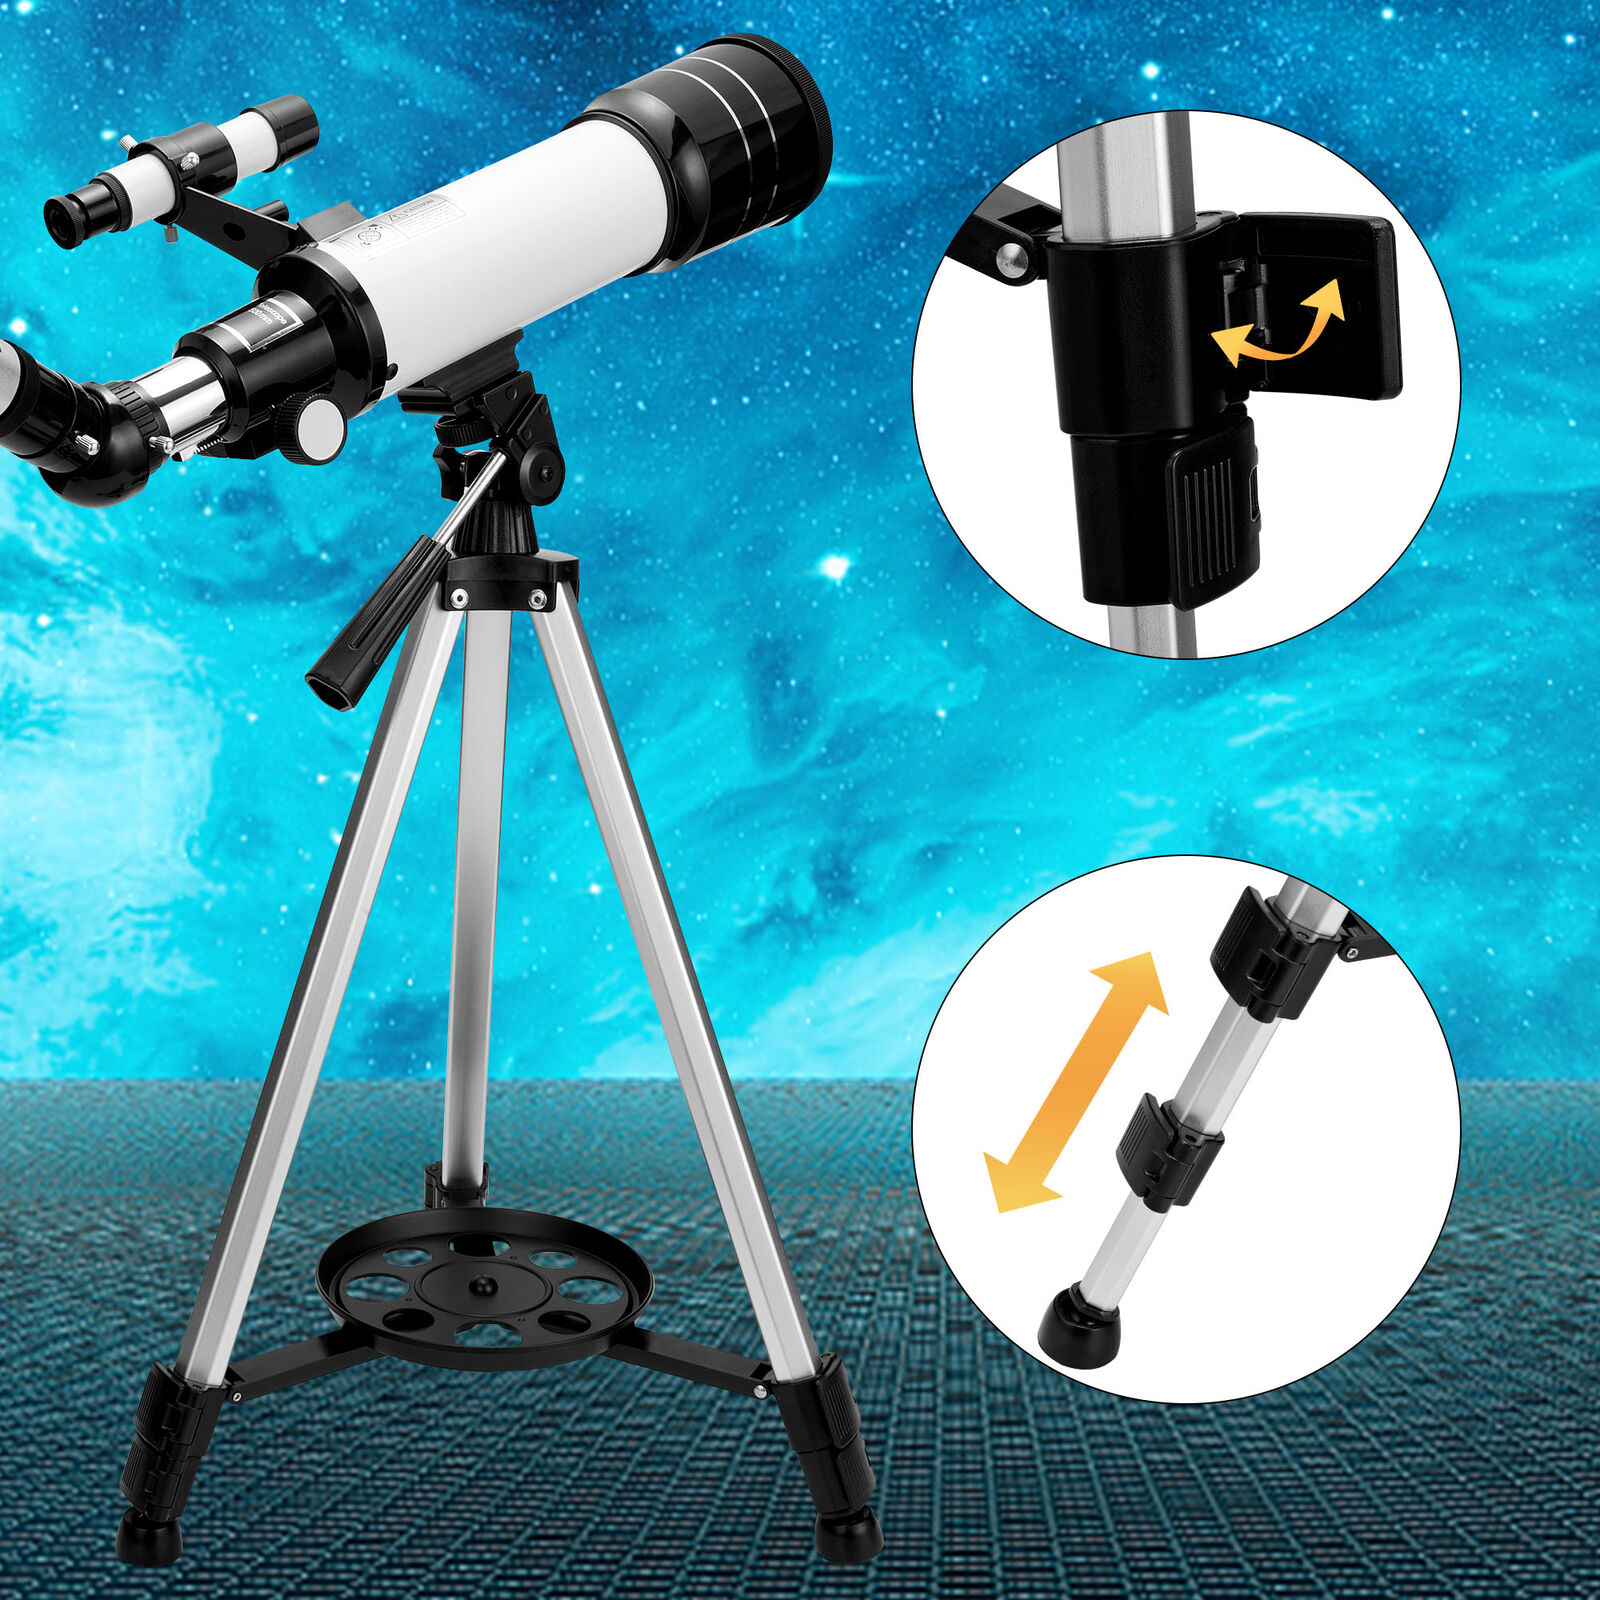 70mm Professional Astronomical Telescope High Tripod Travel Bag Adults Kids Gift